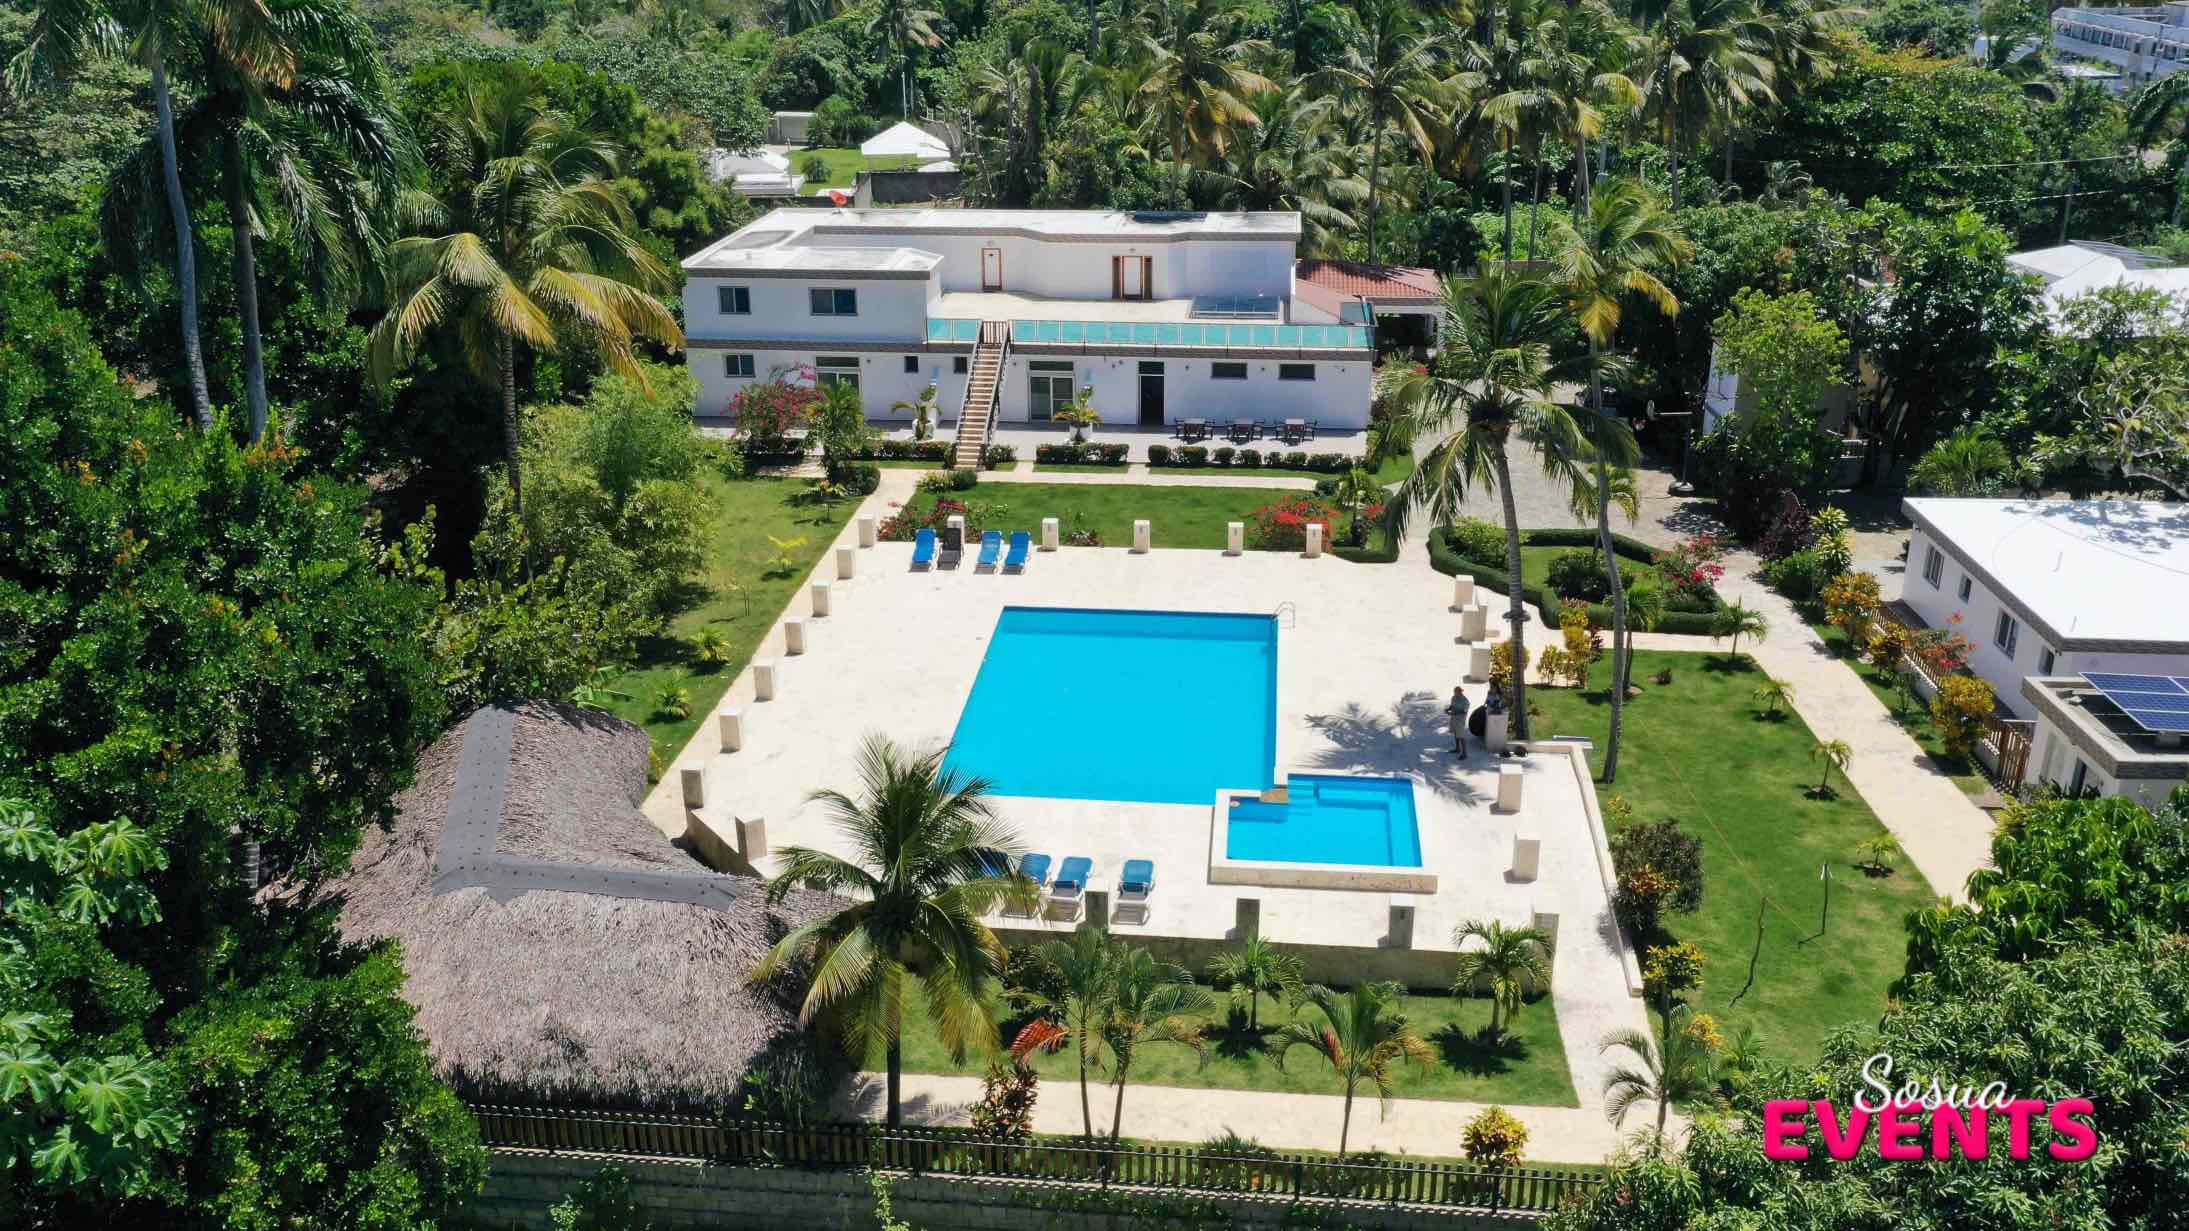 Bachelor party compound in Sosua Dominican Republic